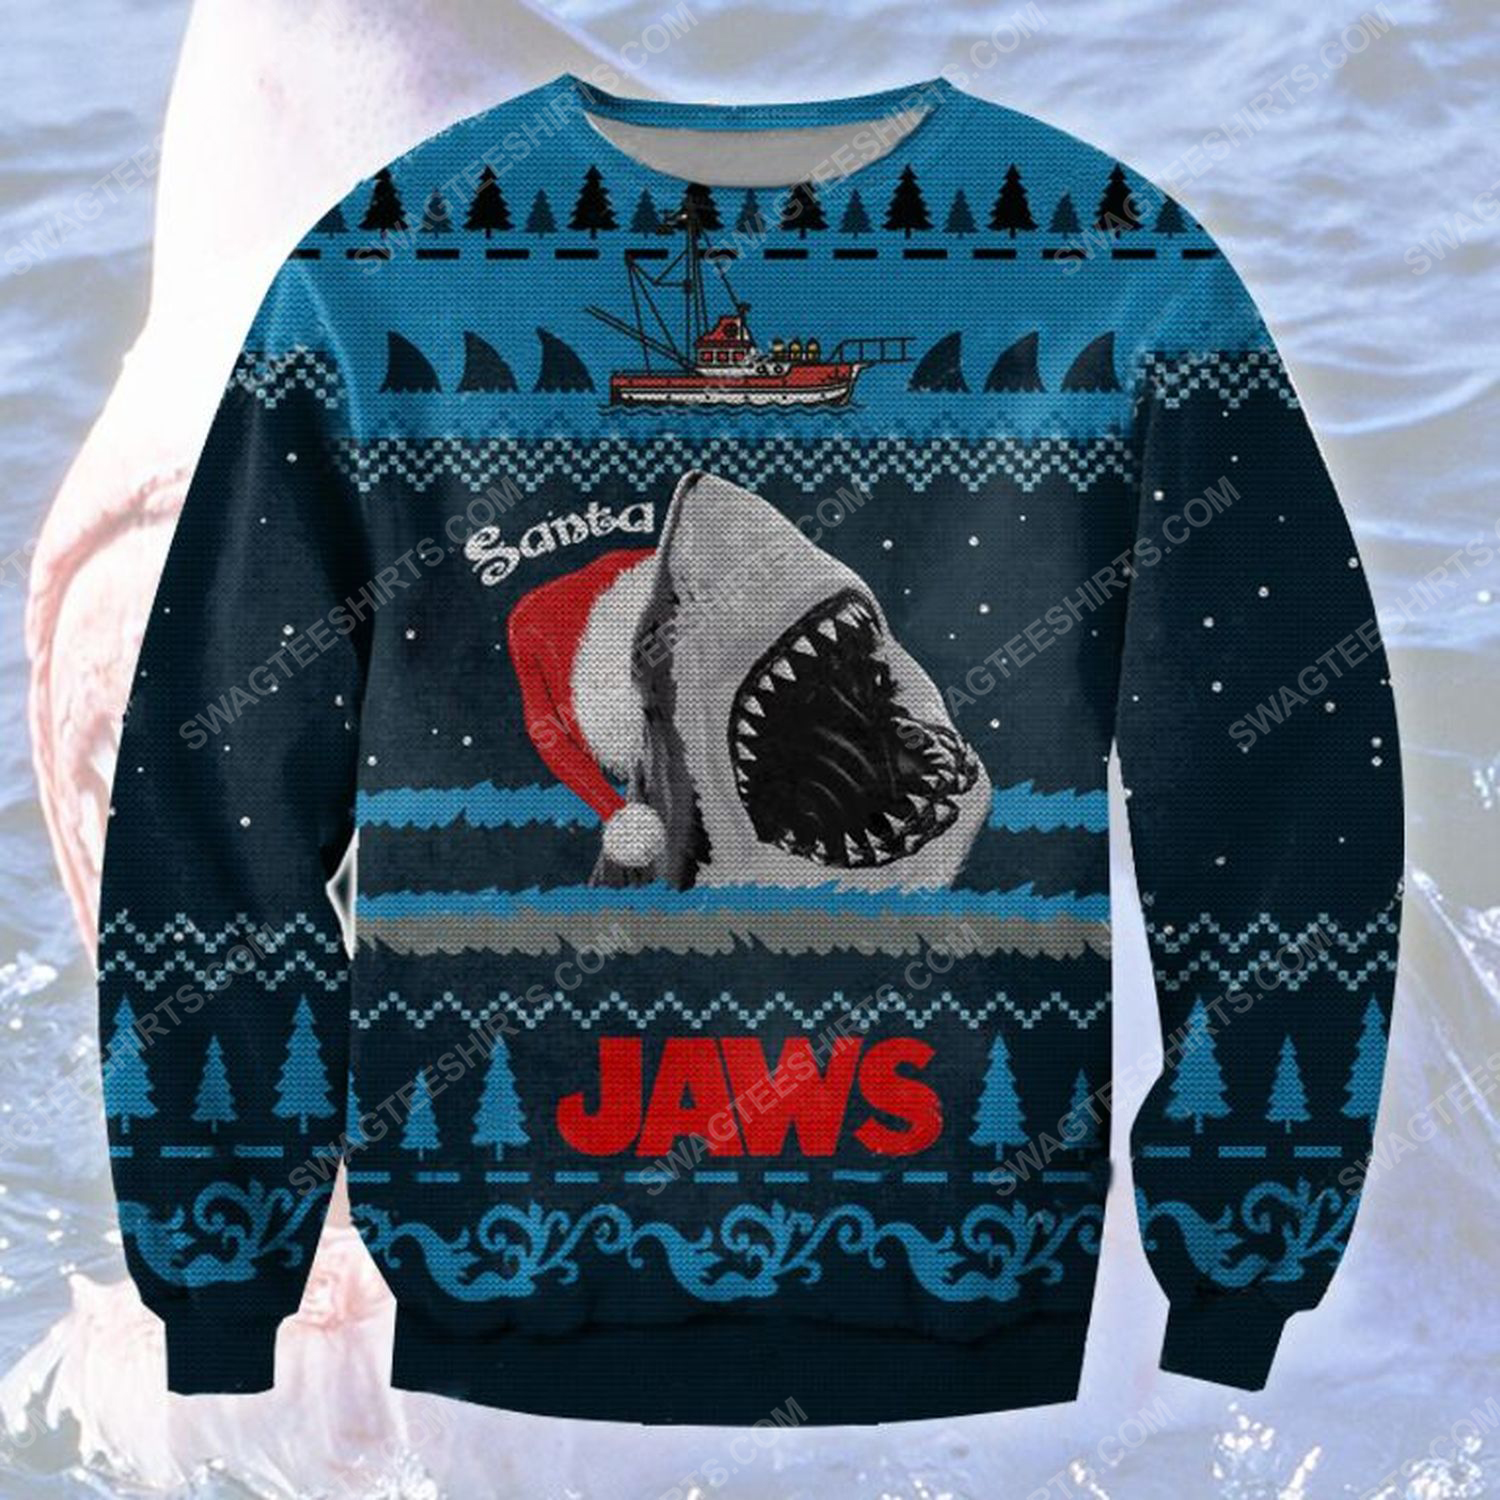 Santa jaws ugly christmas sweater - Copy (2)